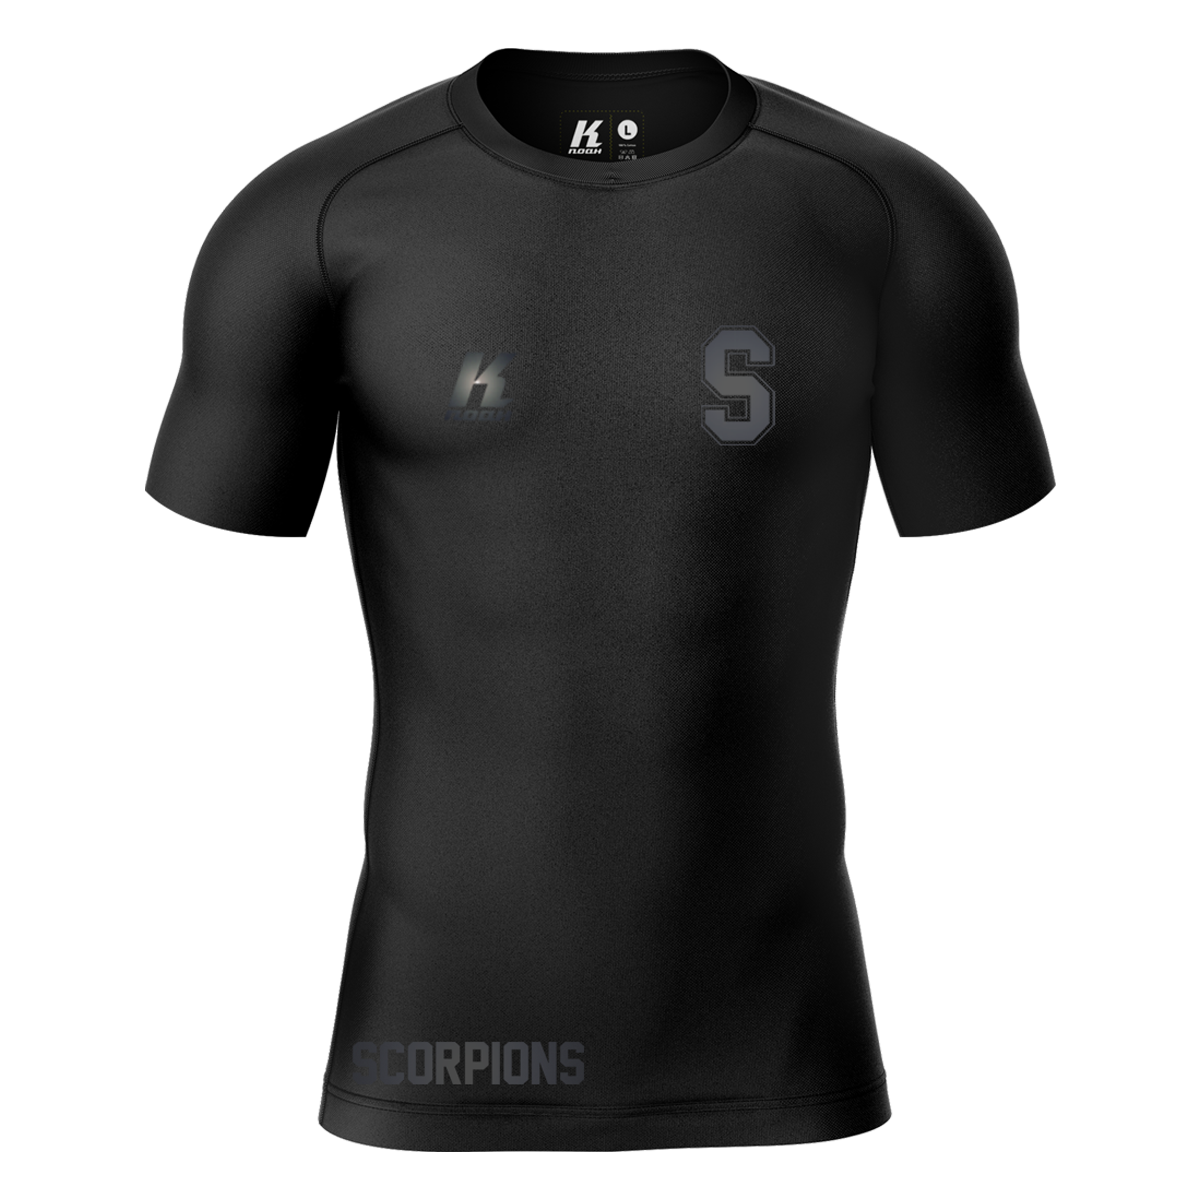 Scorpions "Blackline" K.Tech Compression Shortsleeve Shirt